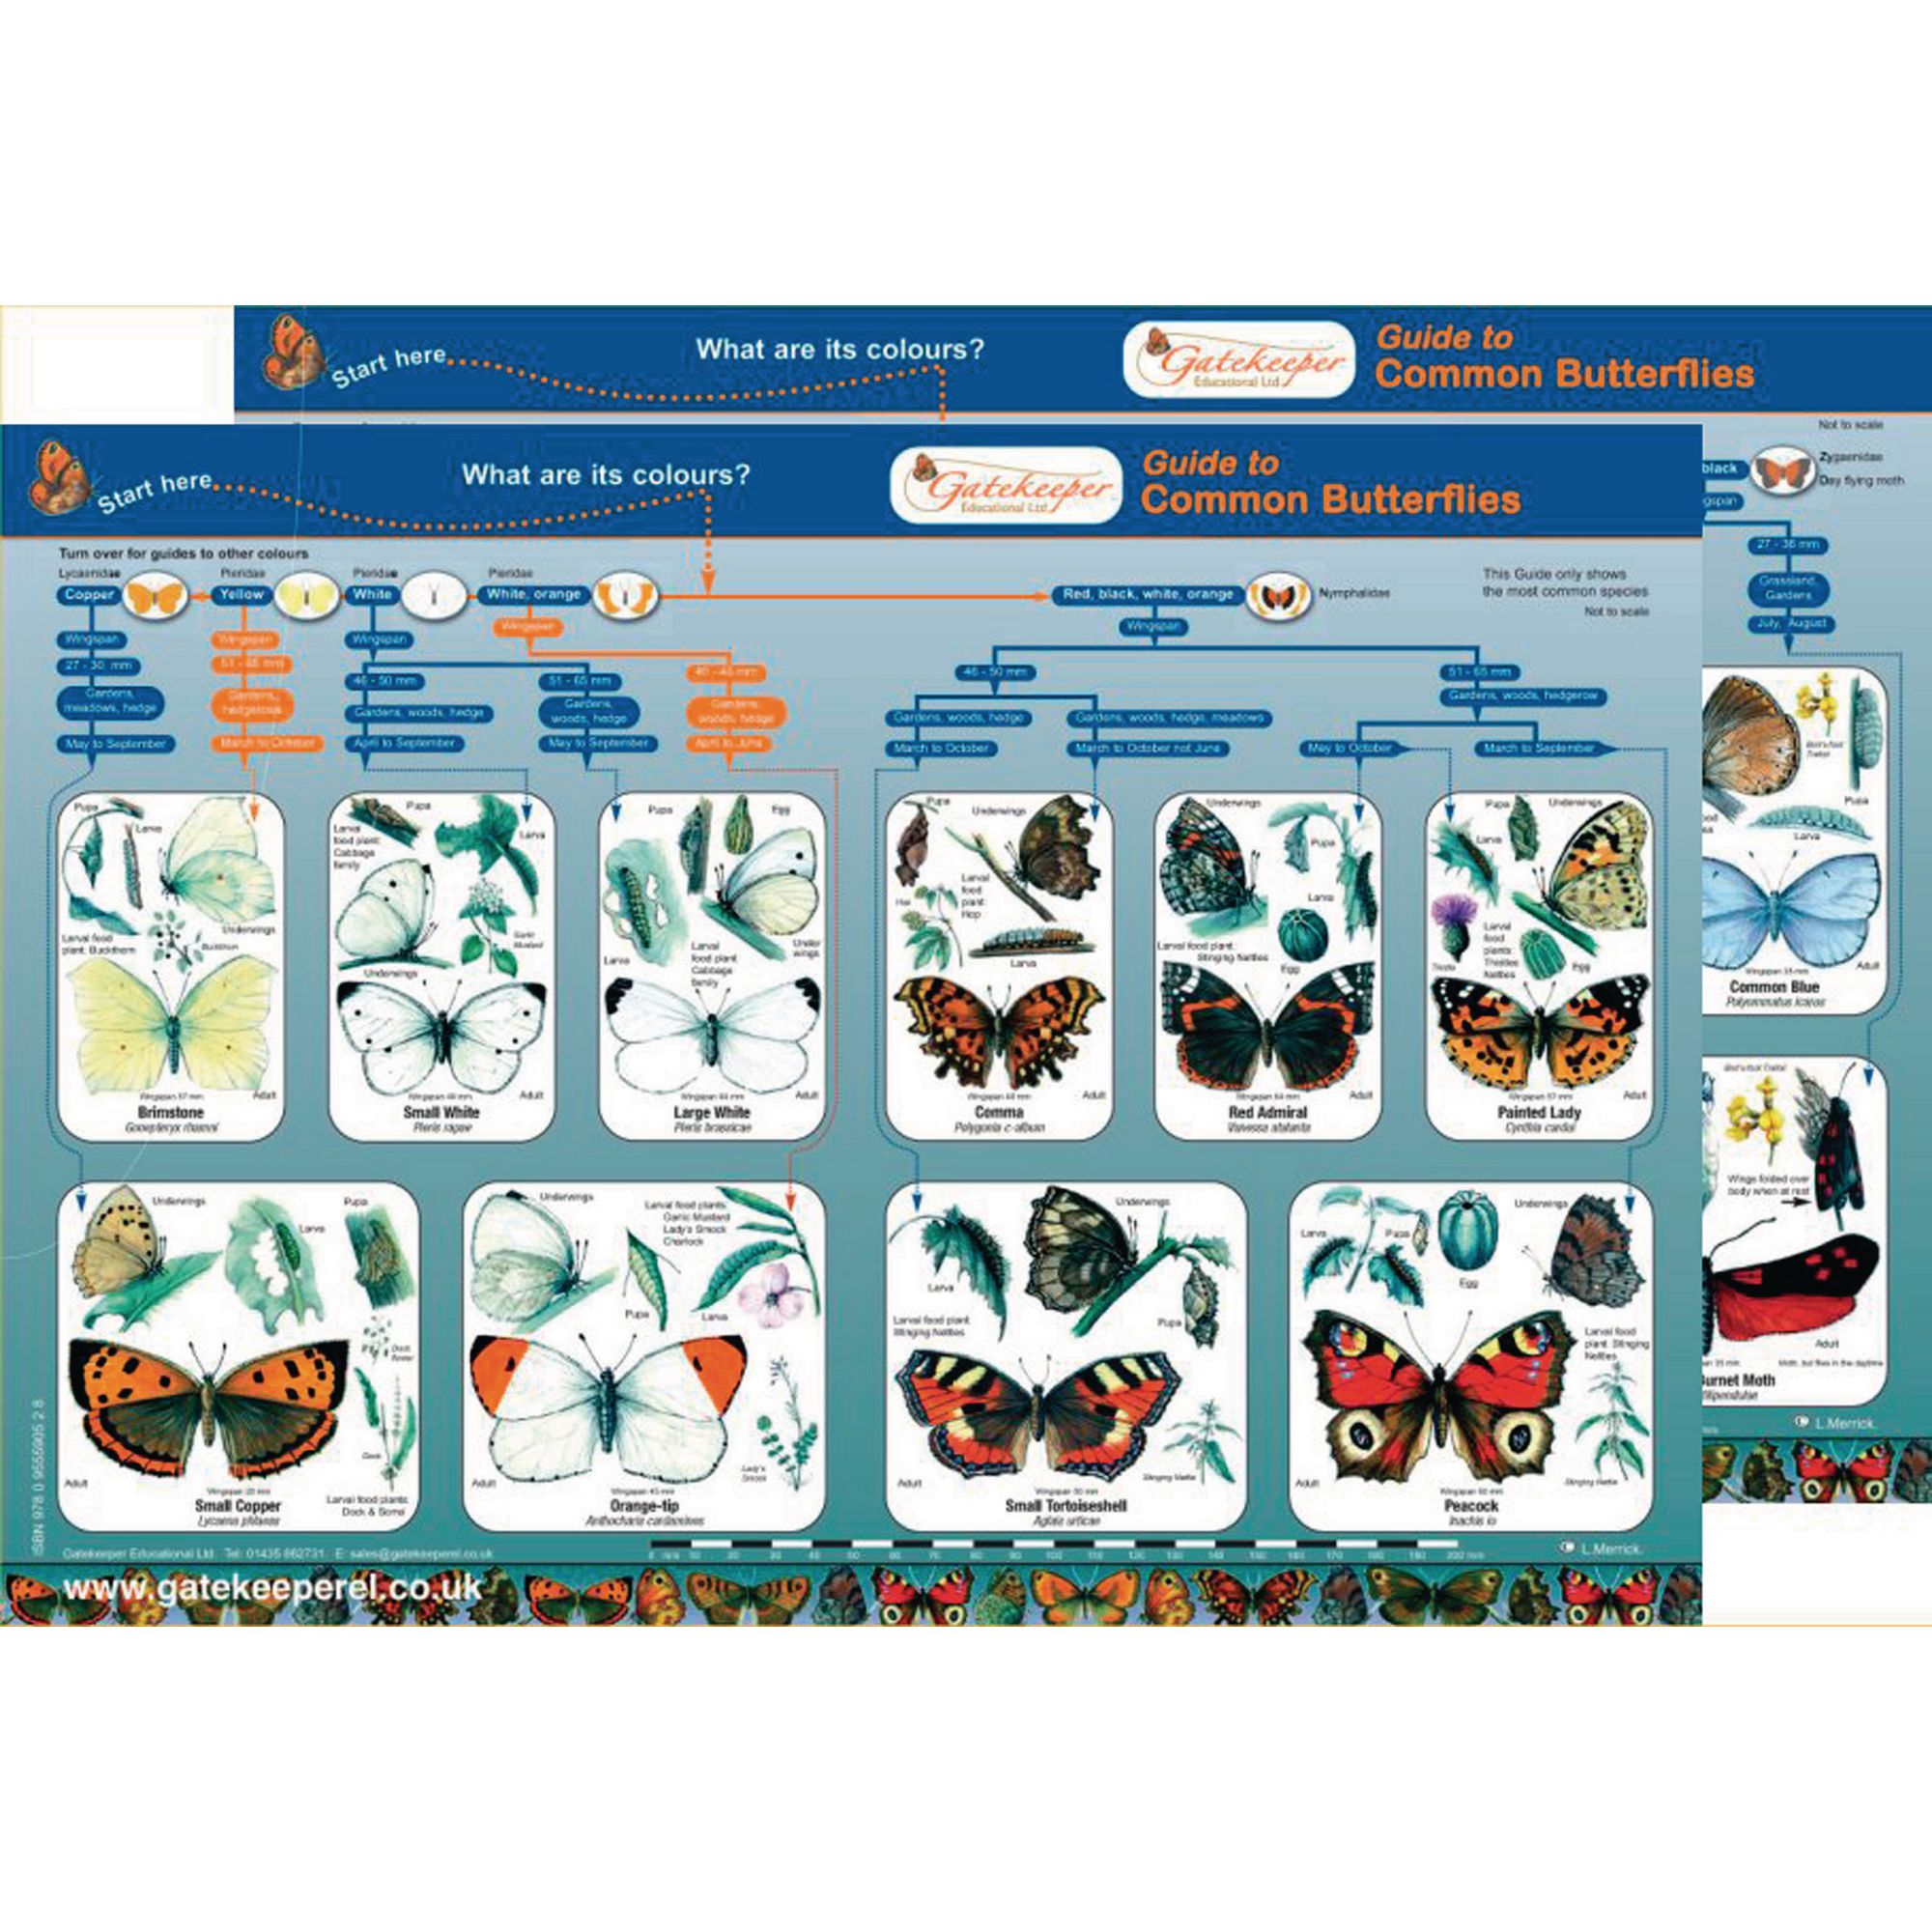 Common Butterflies Identification Guide